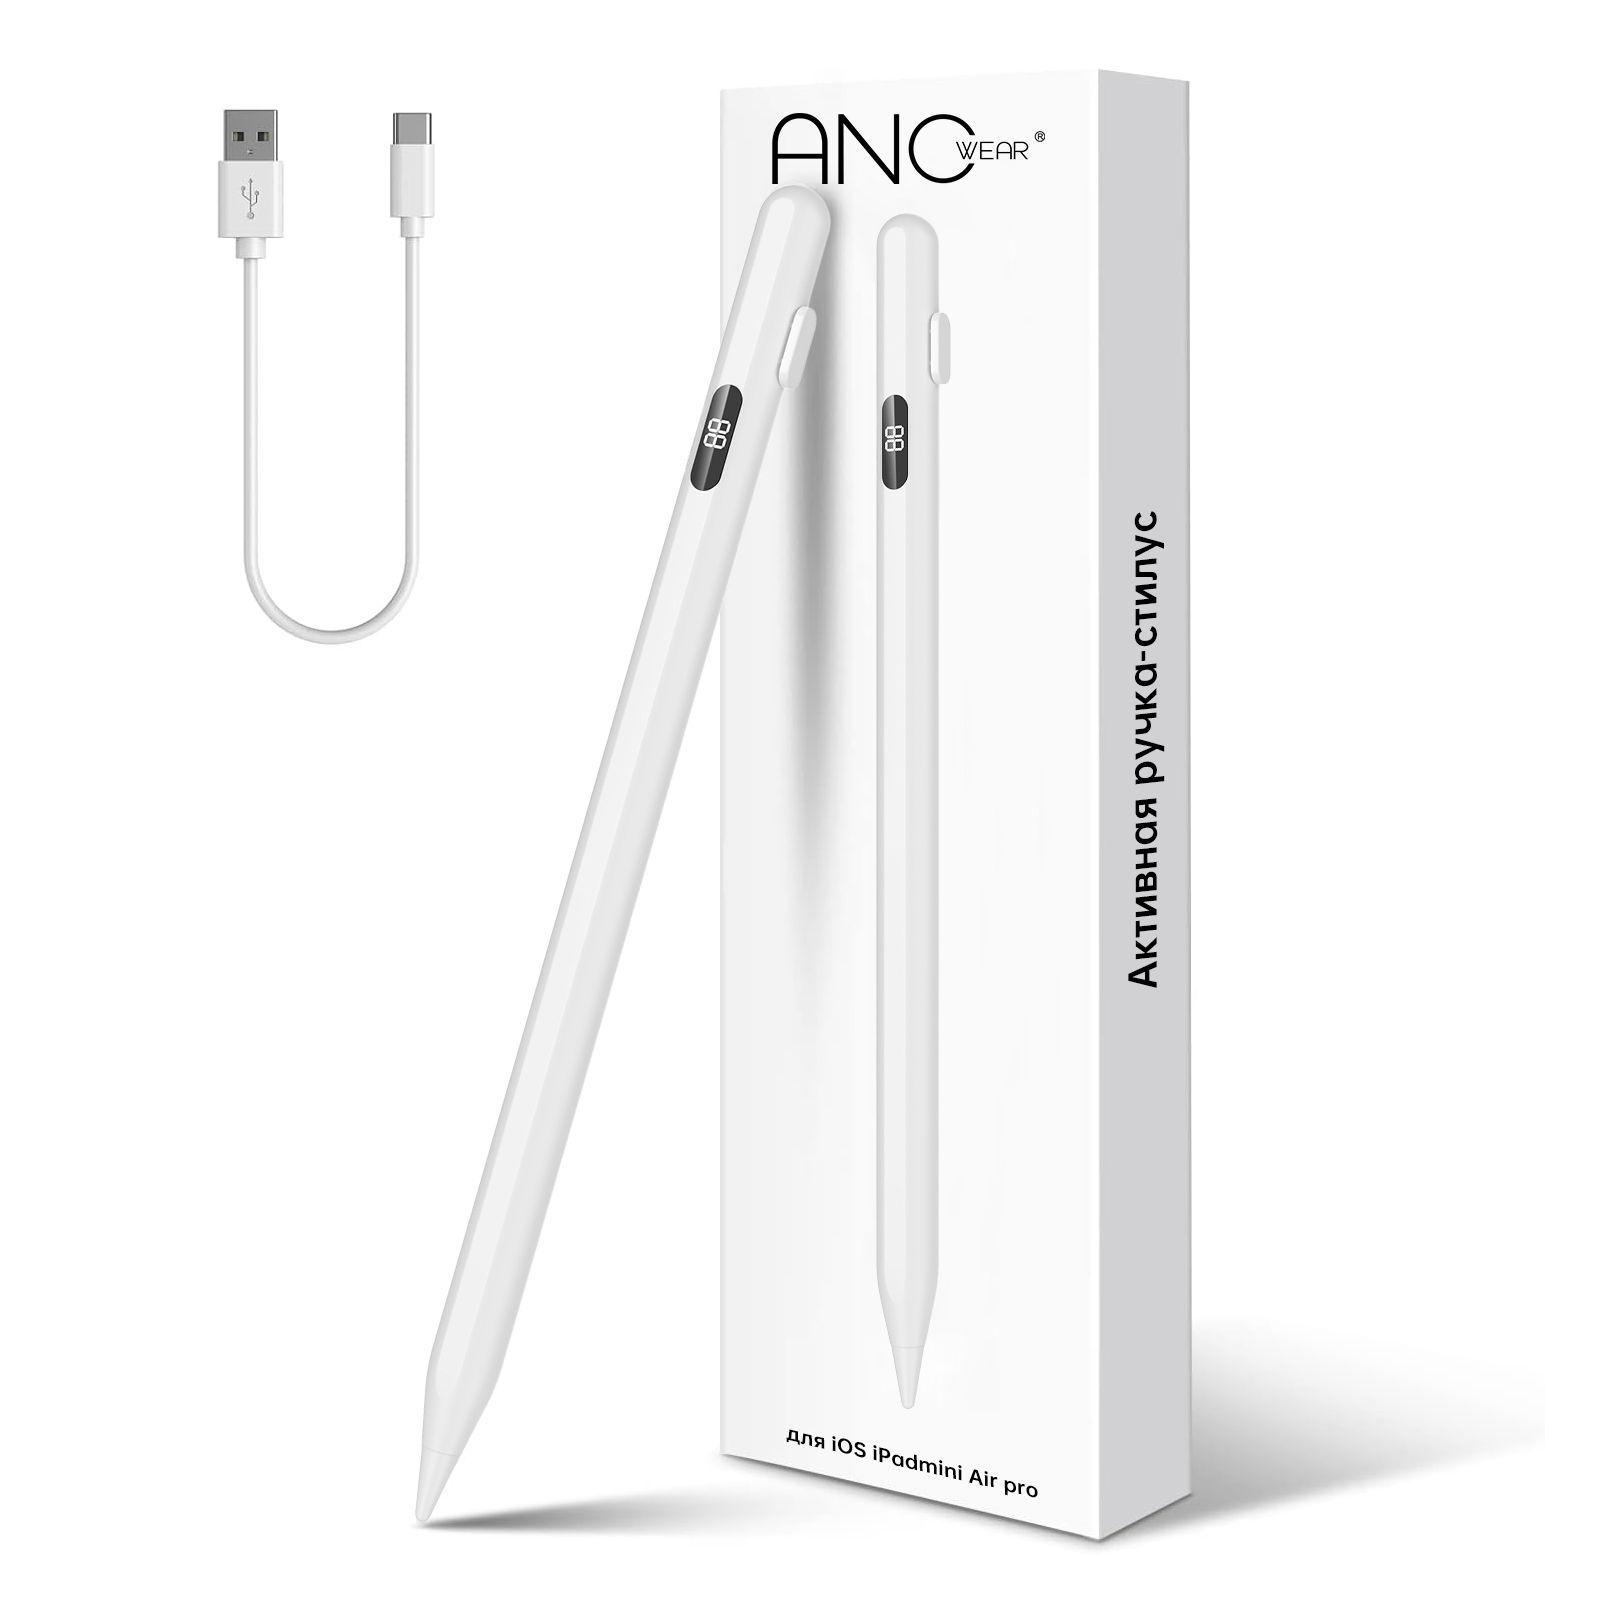 ANСwear Ручка-стилус для планшетов iPad